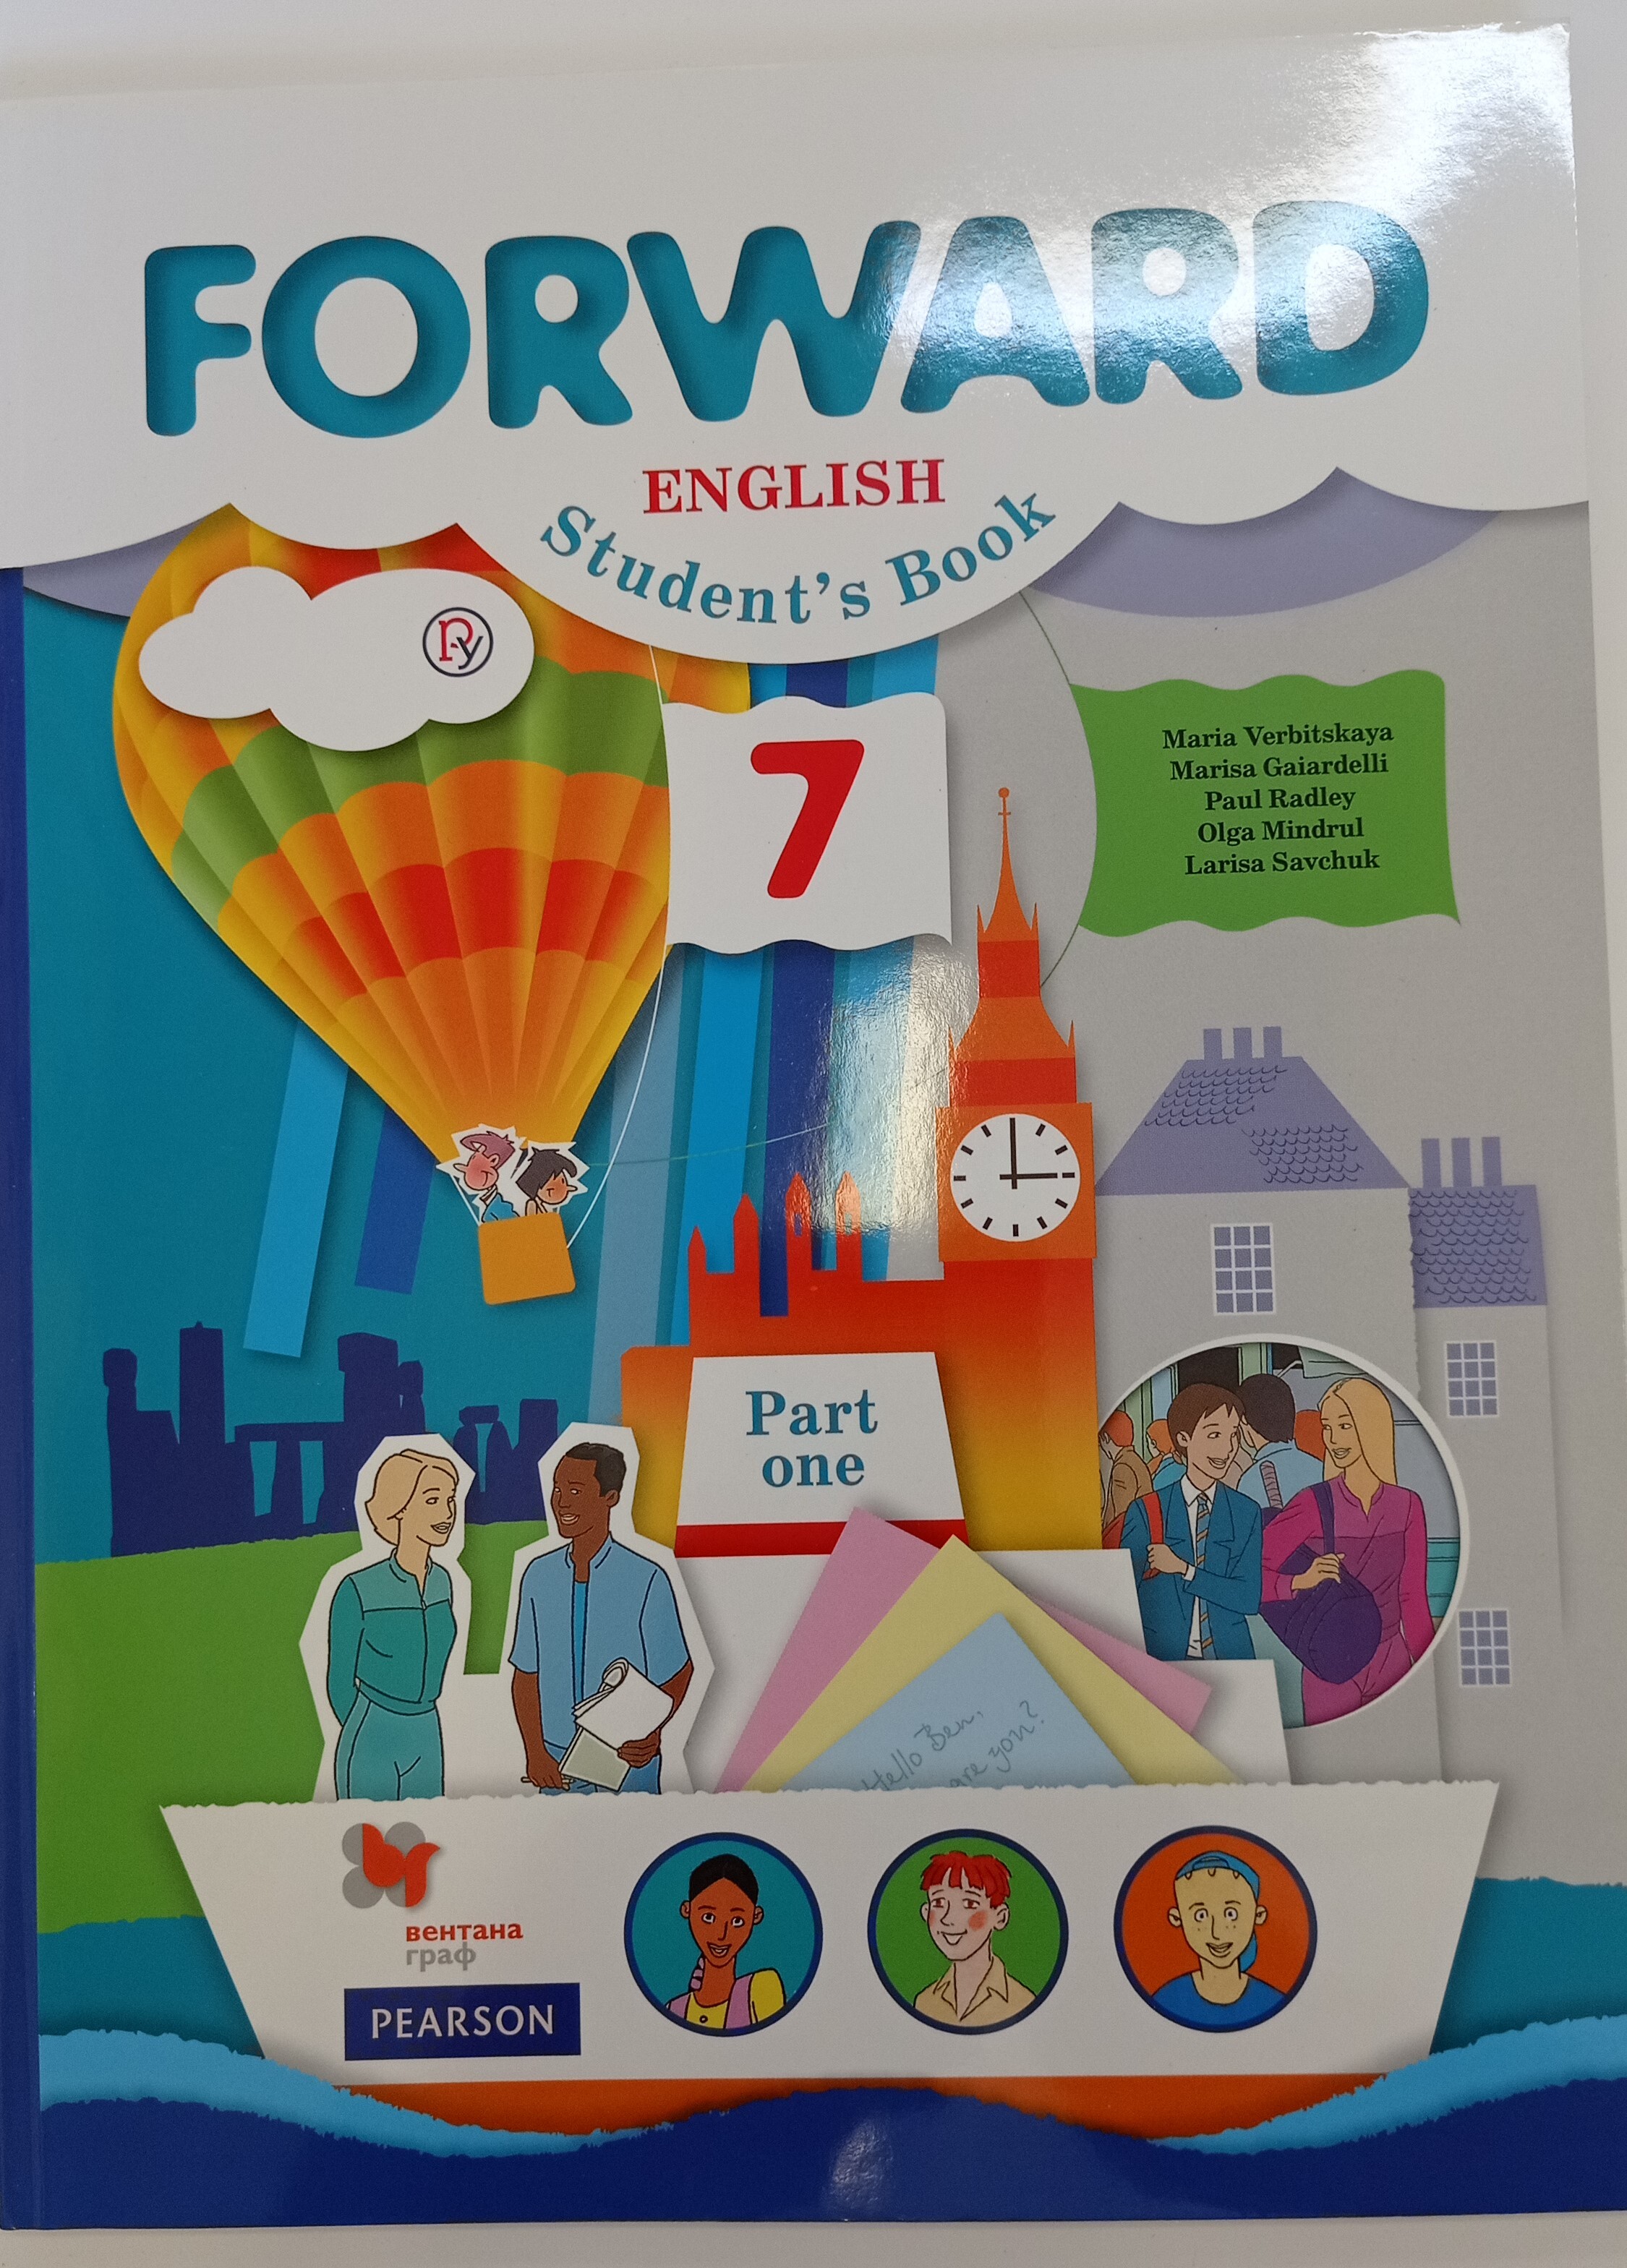 Forward english 2 класс часть 2. Forward 7 класс. Форвард 2 класс учебник. Forward students book 1 класс. Forward English student's book 7 класс 1 часть.